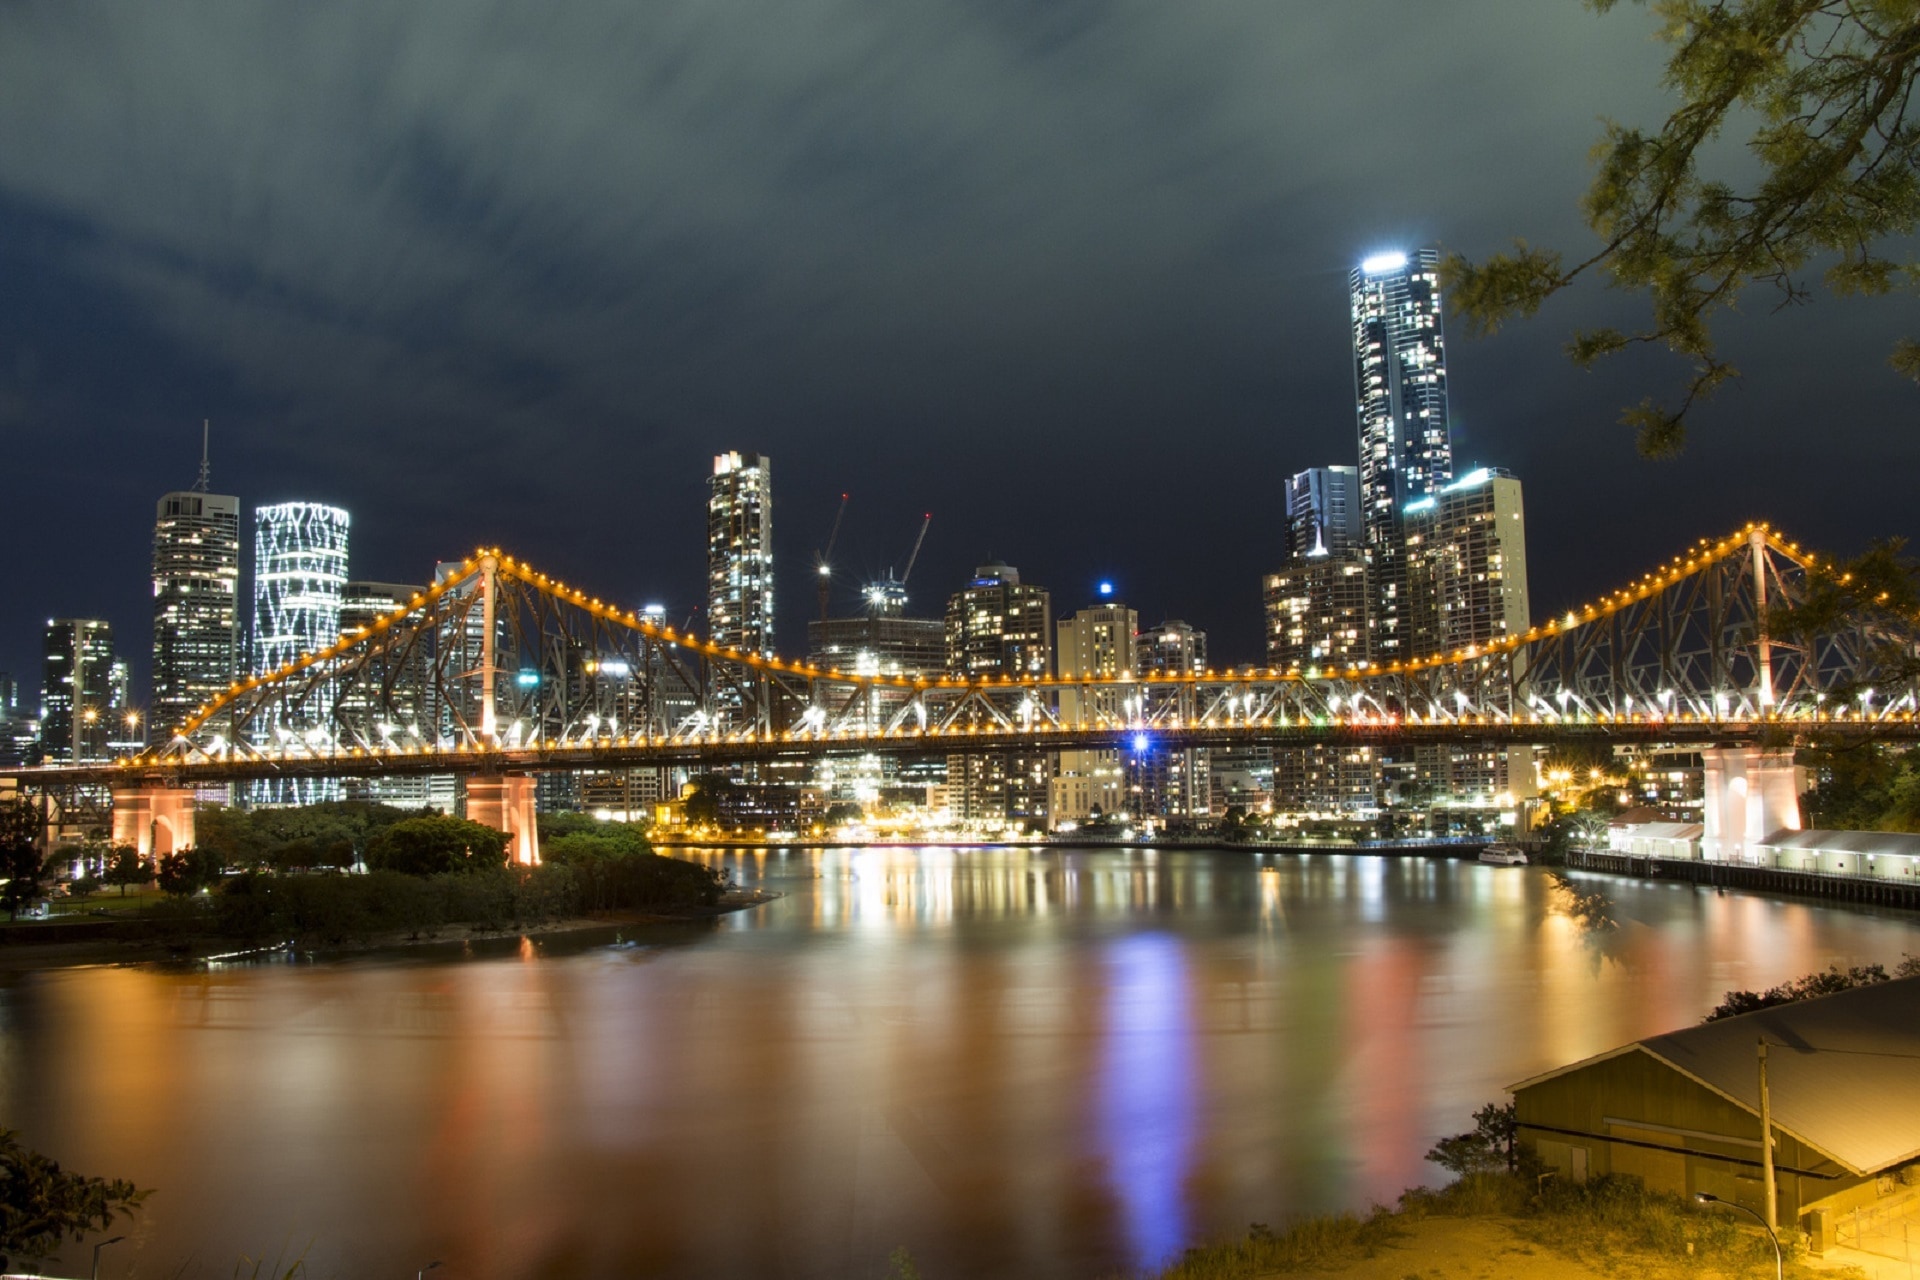 Night, Lights, Story Bridge, Brisbane, reflection, night